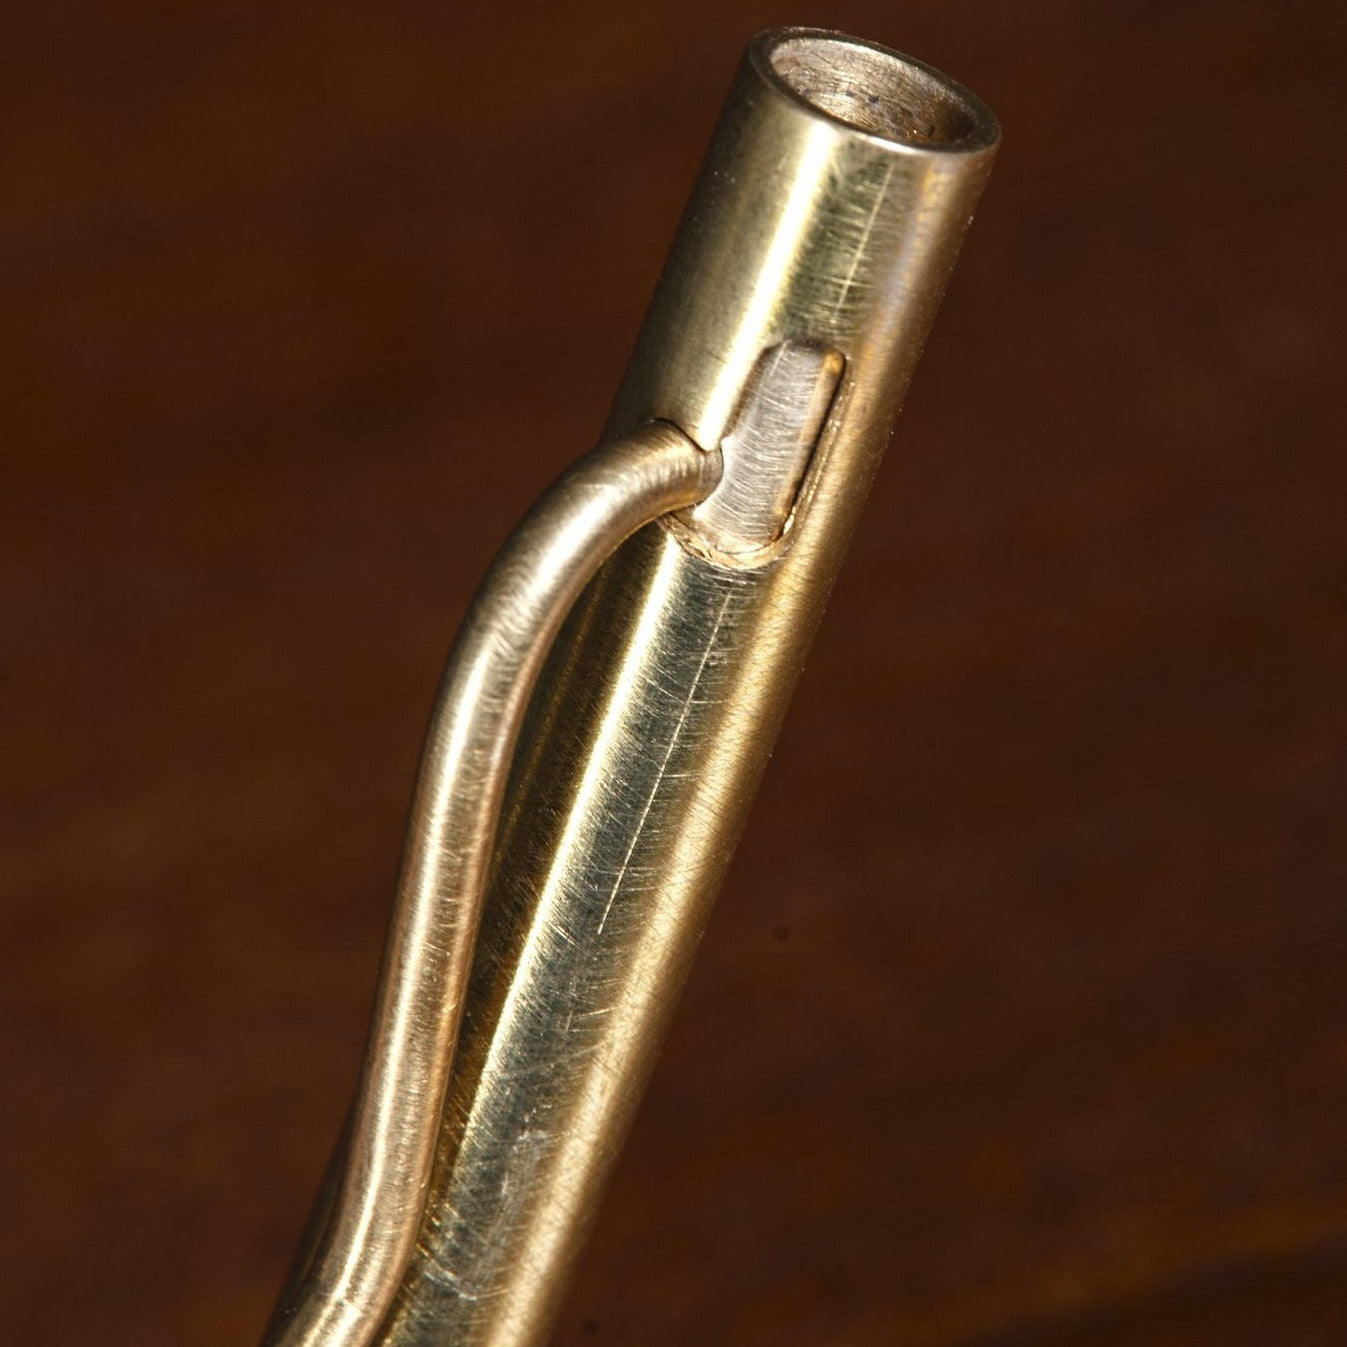 Tik Tik pen Stationary Writing tools, vintage pen, ancient pen, royal pen, handcrafted pen